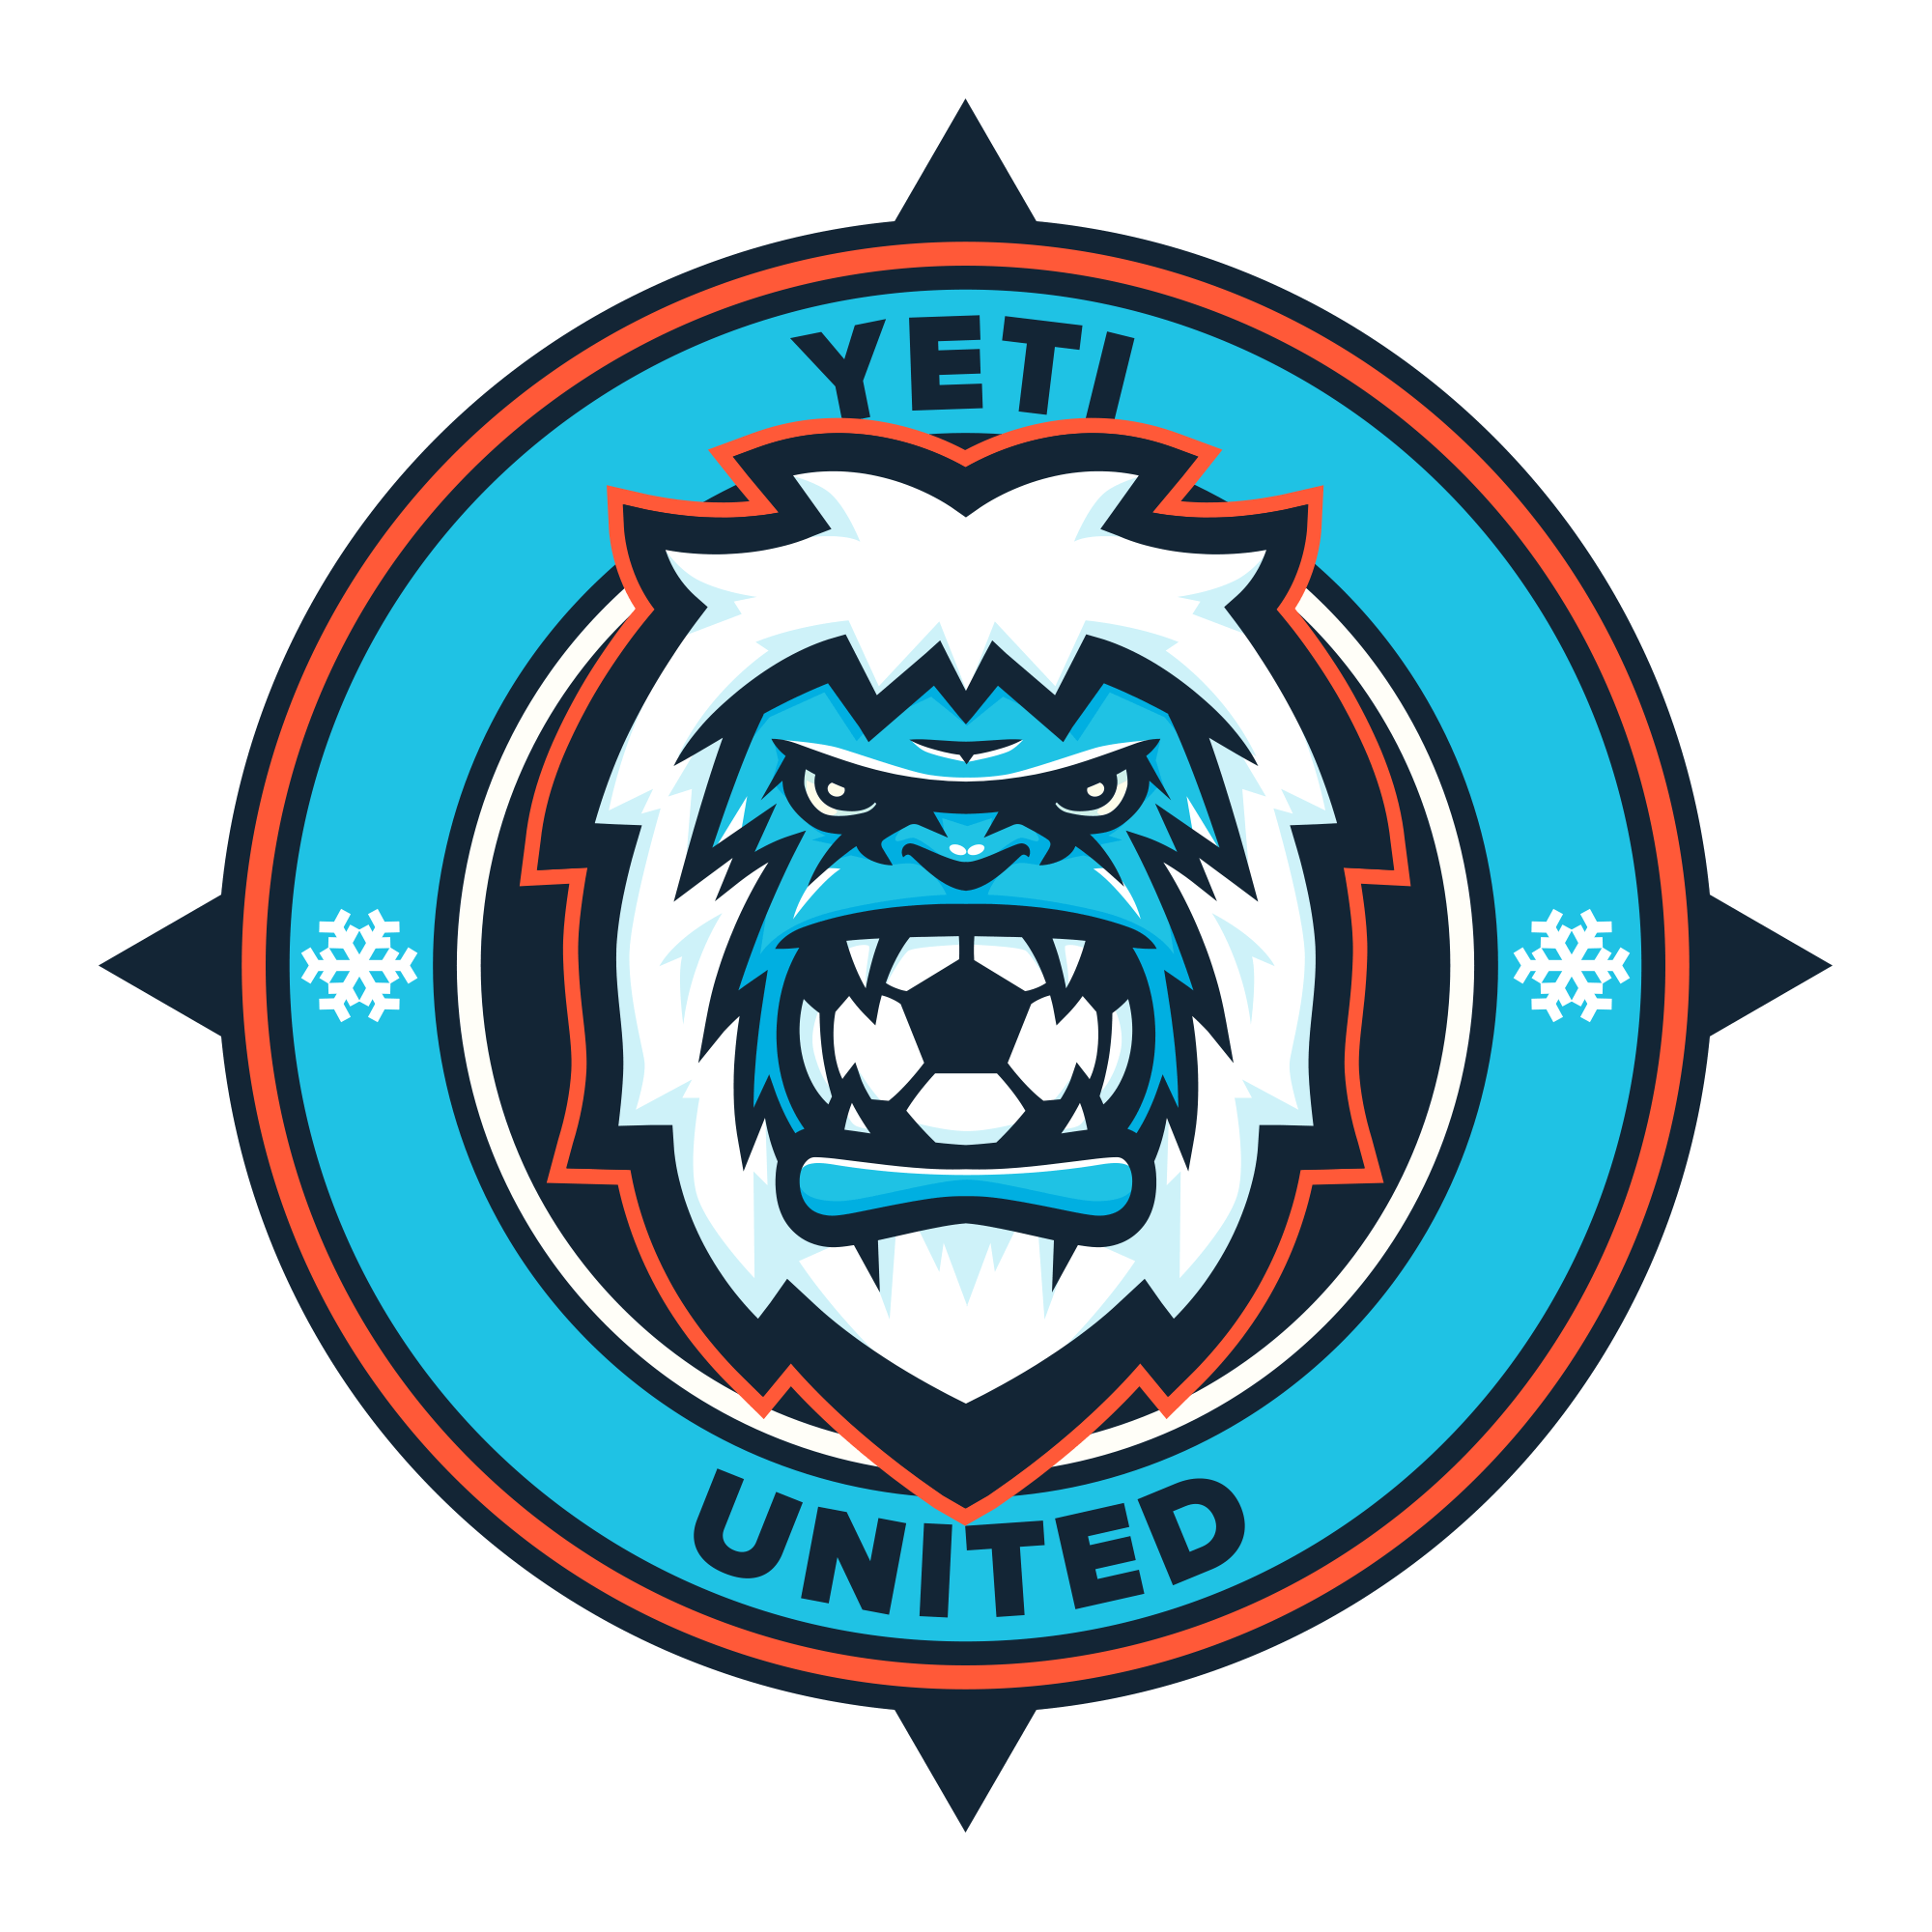 Yeti Logo - Yeti United Logo. Stones River Futbol Club Adult Leauge